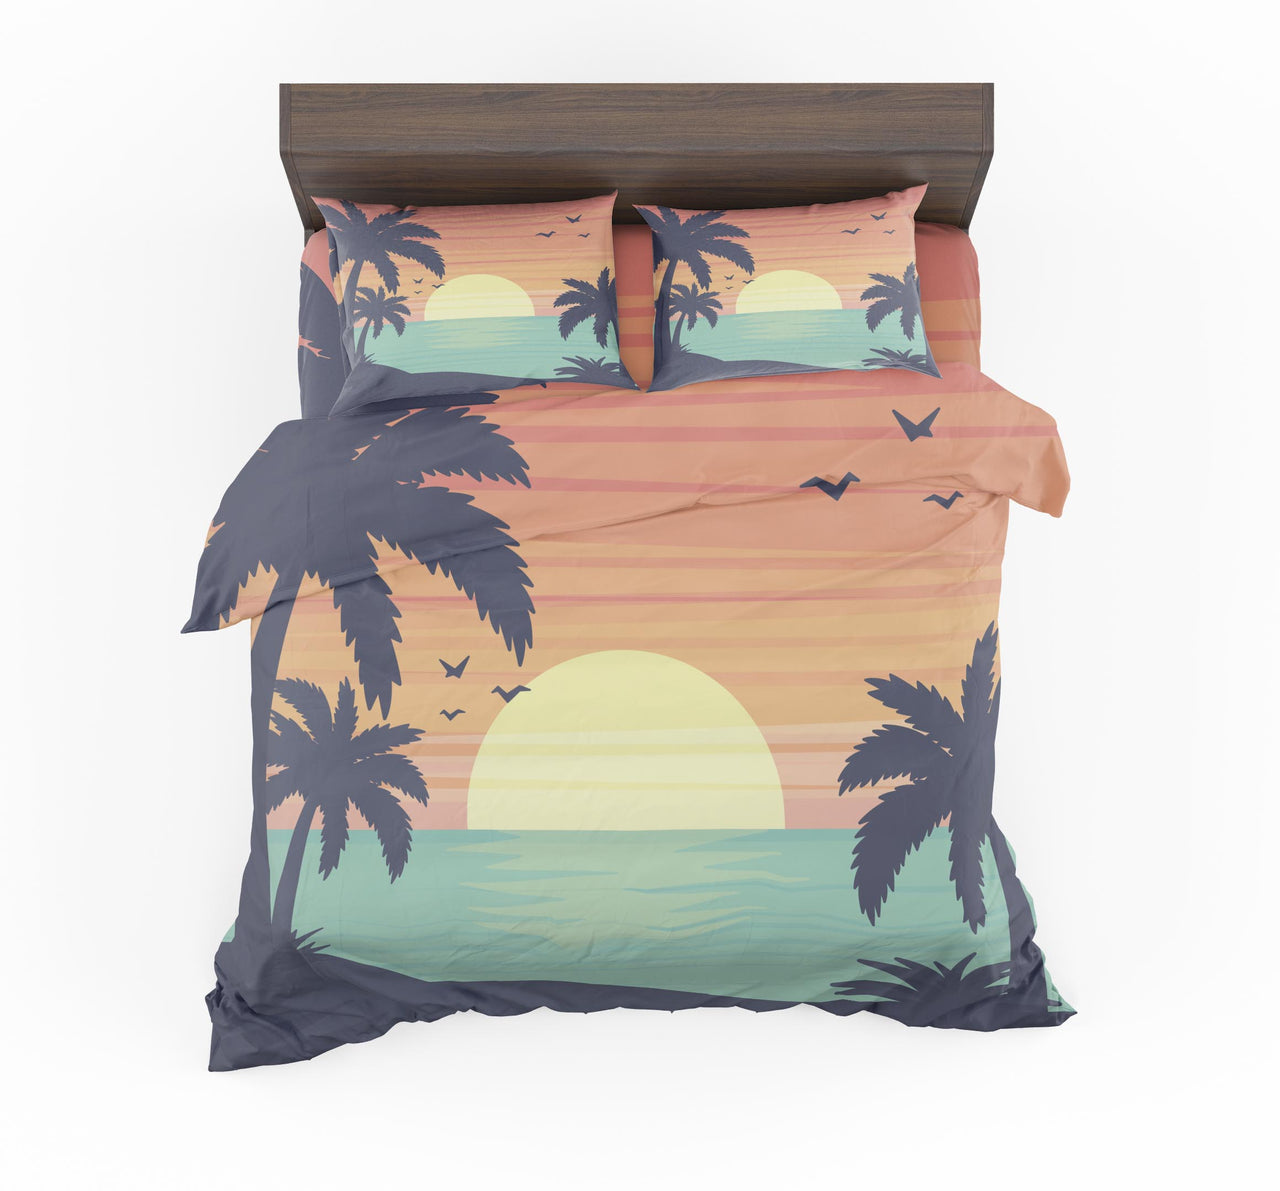 Tropical Summer Theme Designed Bedding Sets